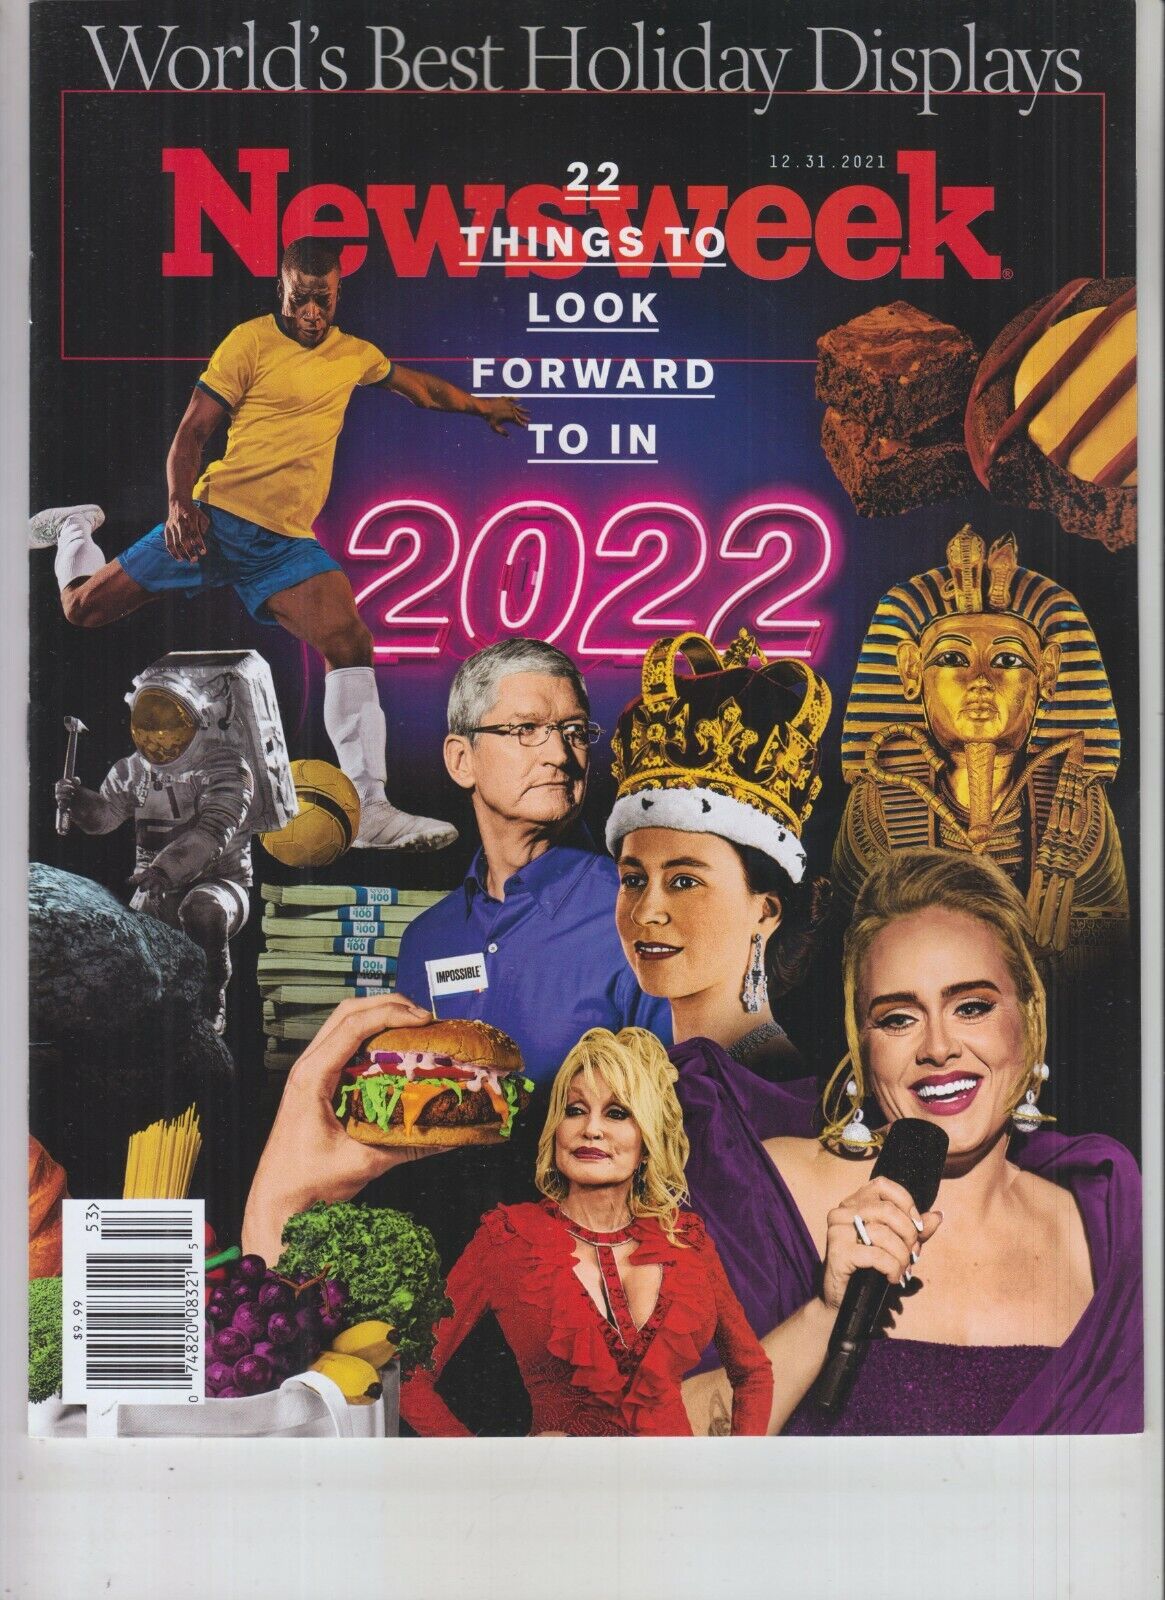 22 THINGS TO LOOK FORWARD TO NEWSWEEK MAGAZINE DEC 31 2021 DOLLY PARTON ADELE